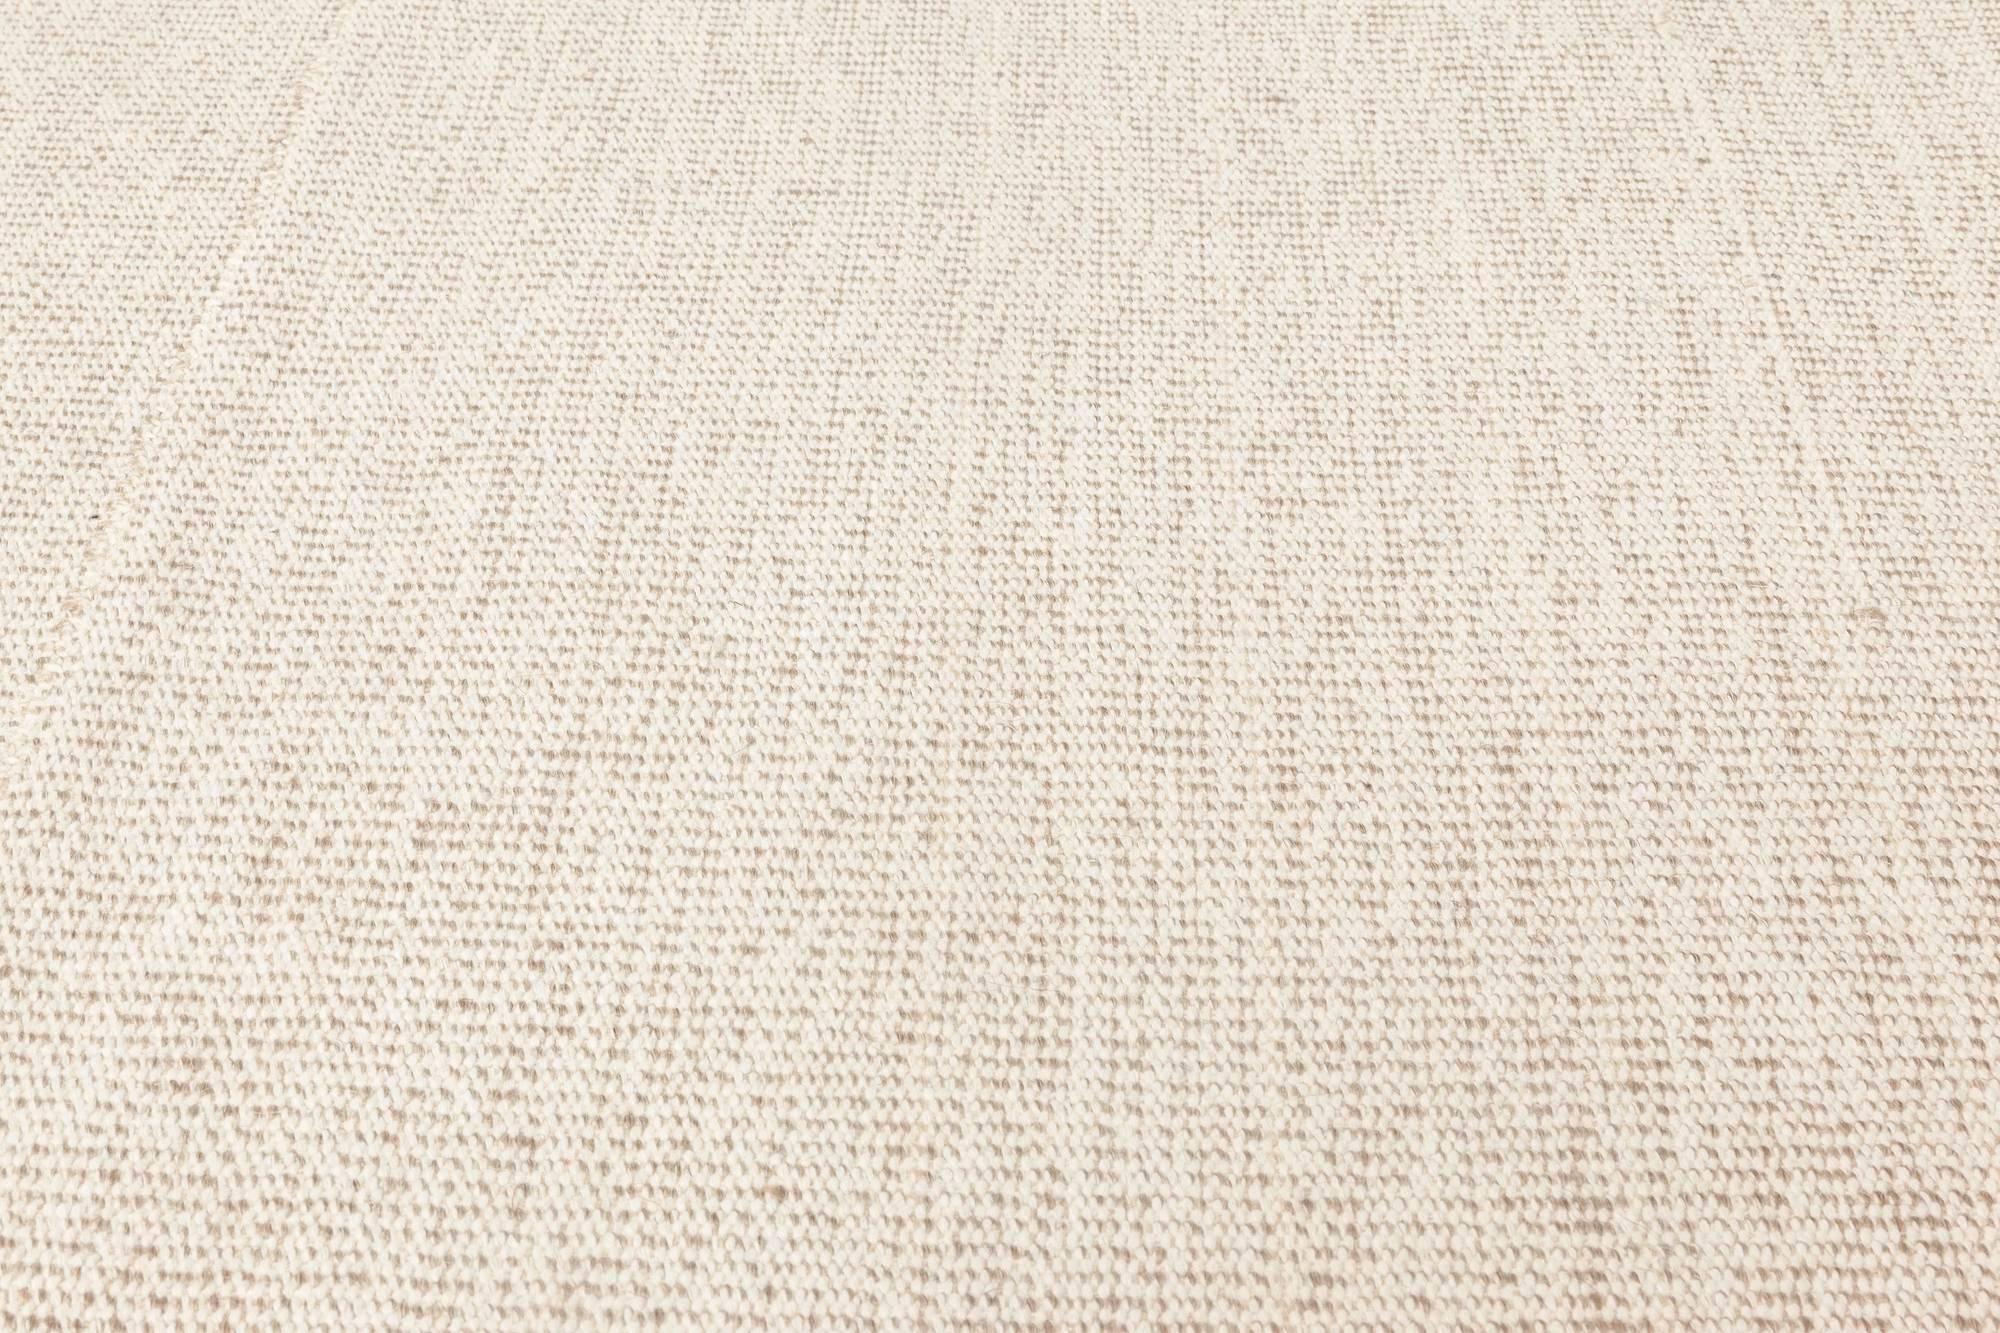 Contemporary sandy beige flat-woven wool Kilim rug by Doris Leslie Blau
Size: 13'6